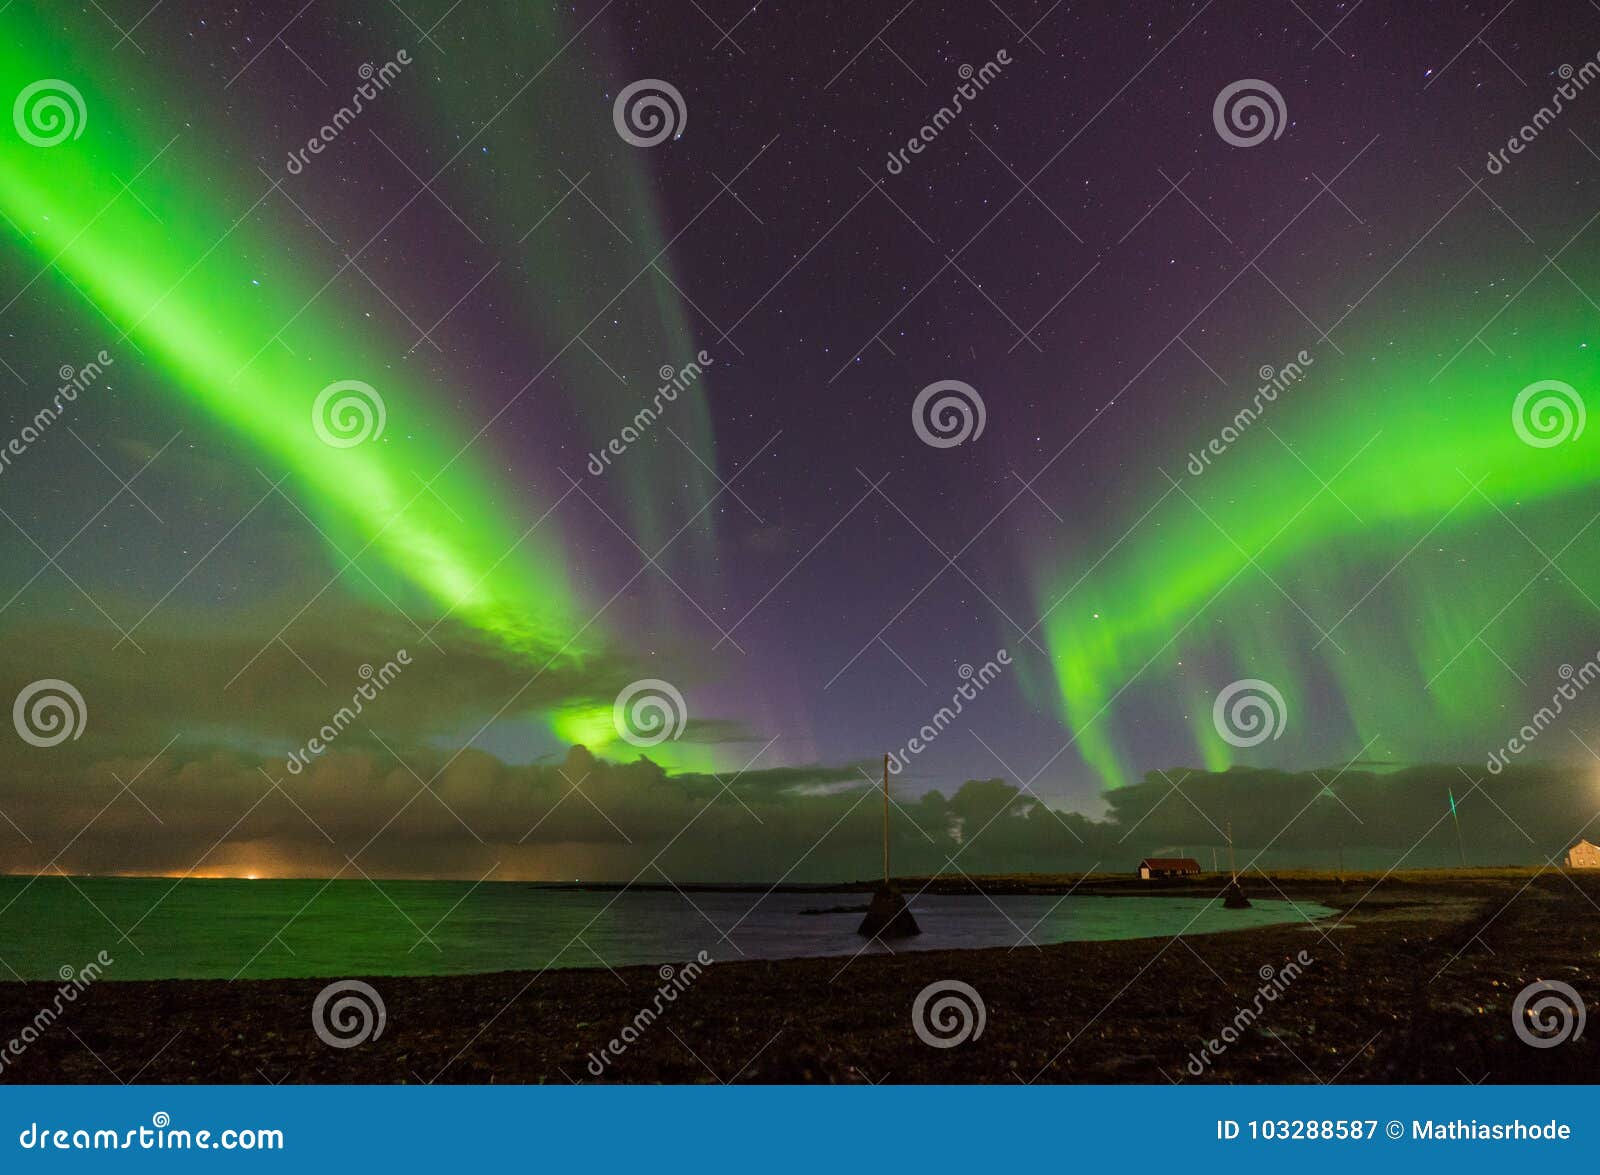 https://thumbs.dreamstime.com/z/aurora-boreal-borealis-acima-da-paisagem-em-isl%C3%A2ndia-103288587.jpg